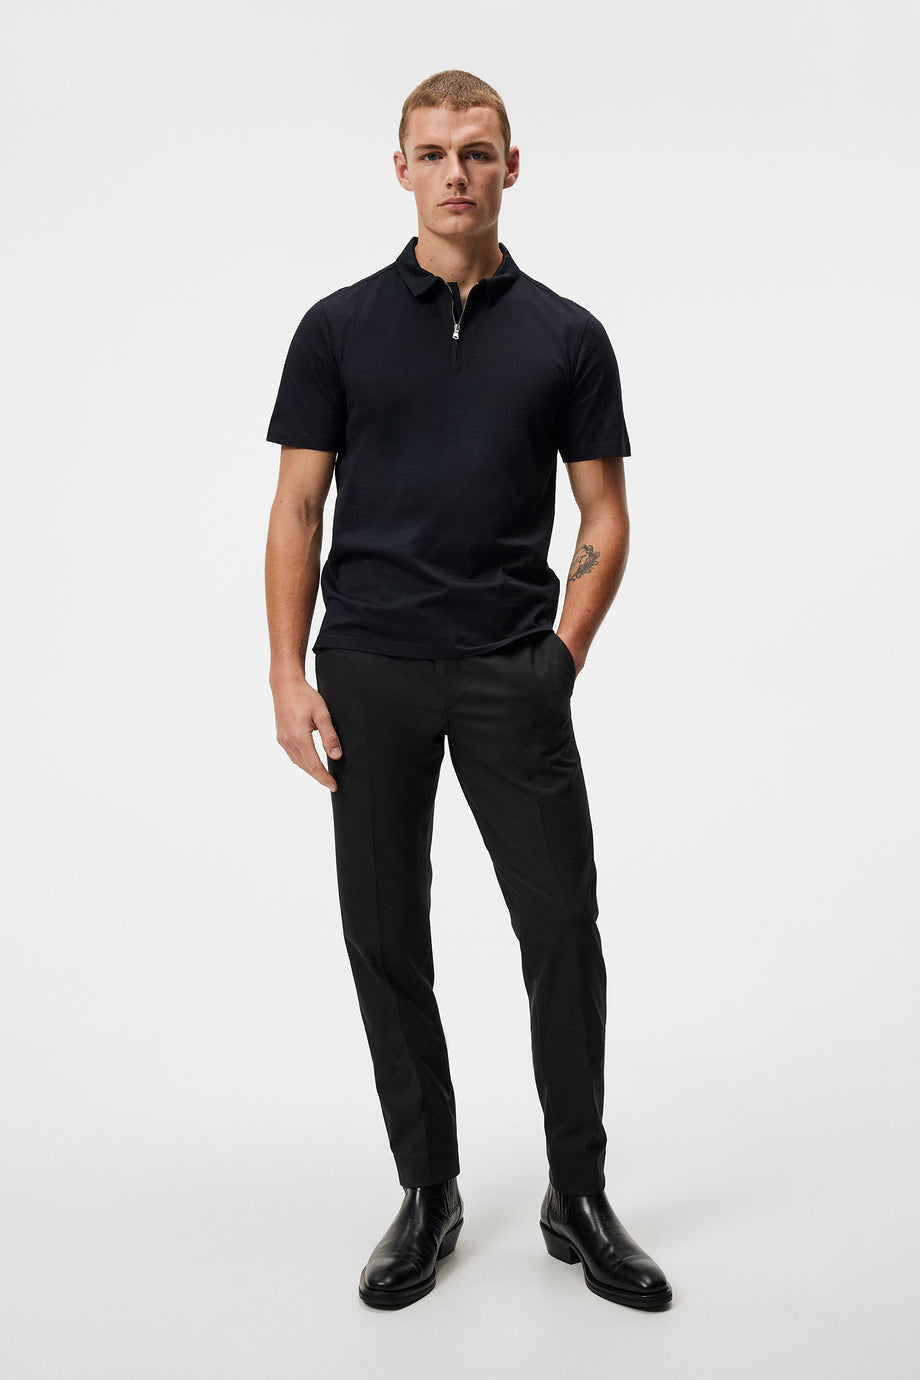 Asher Zip SS Polo Shirt / Black